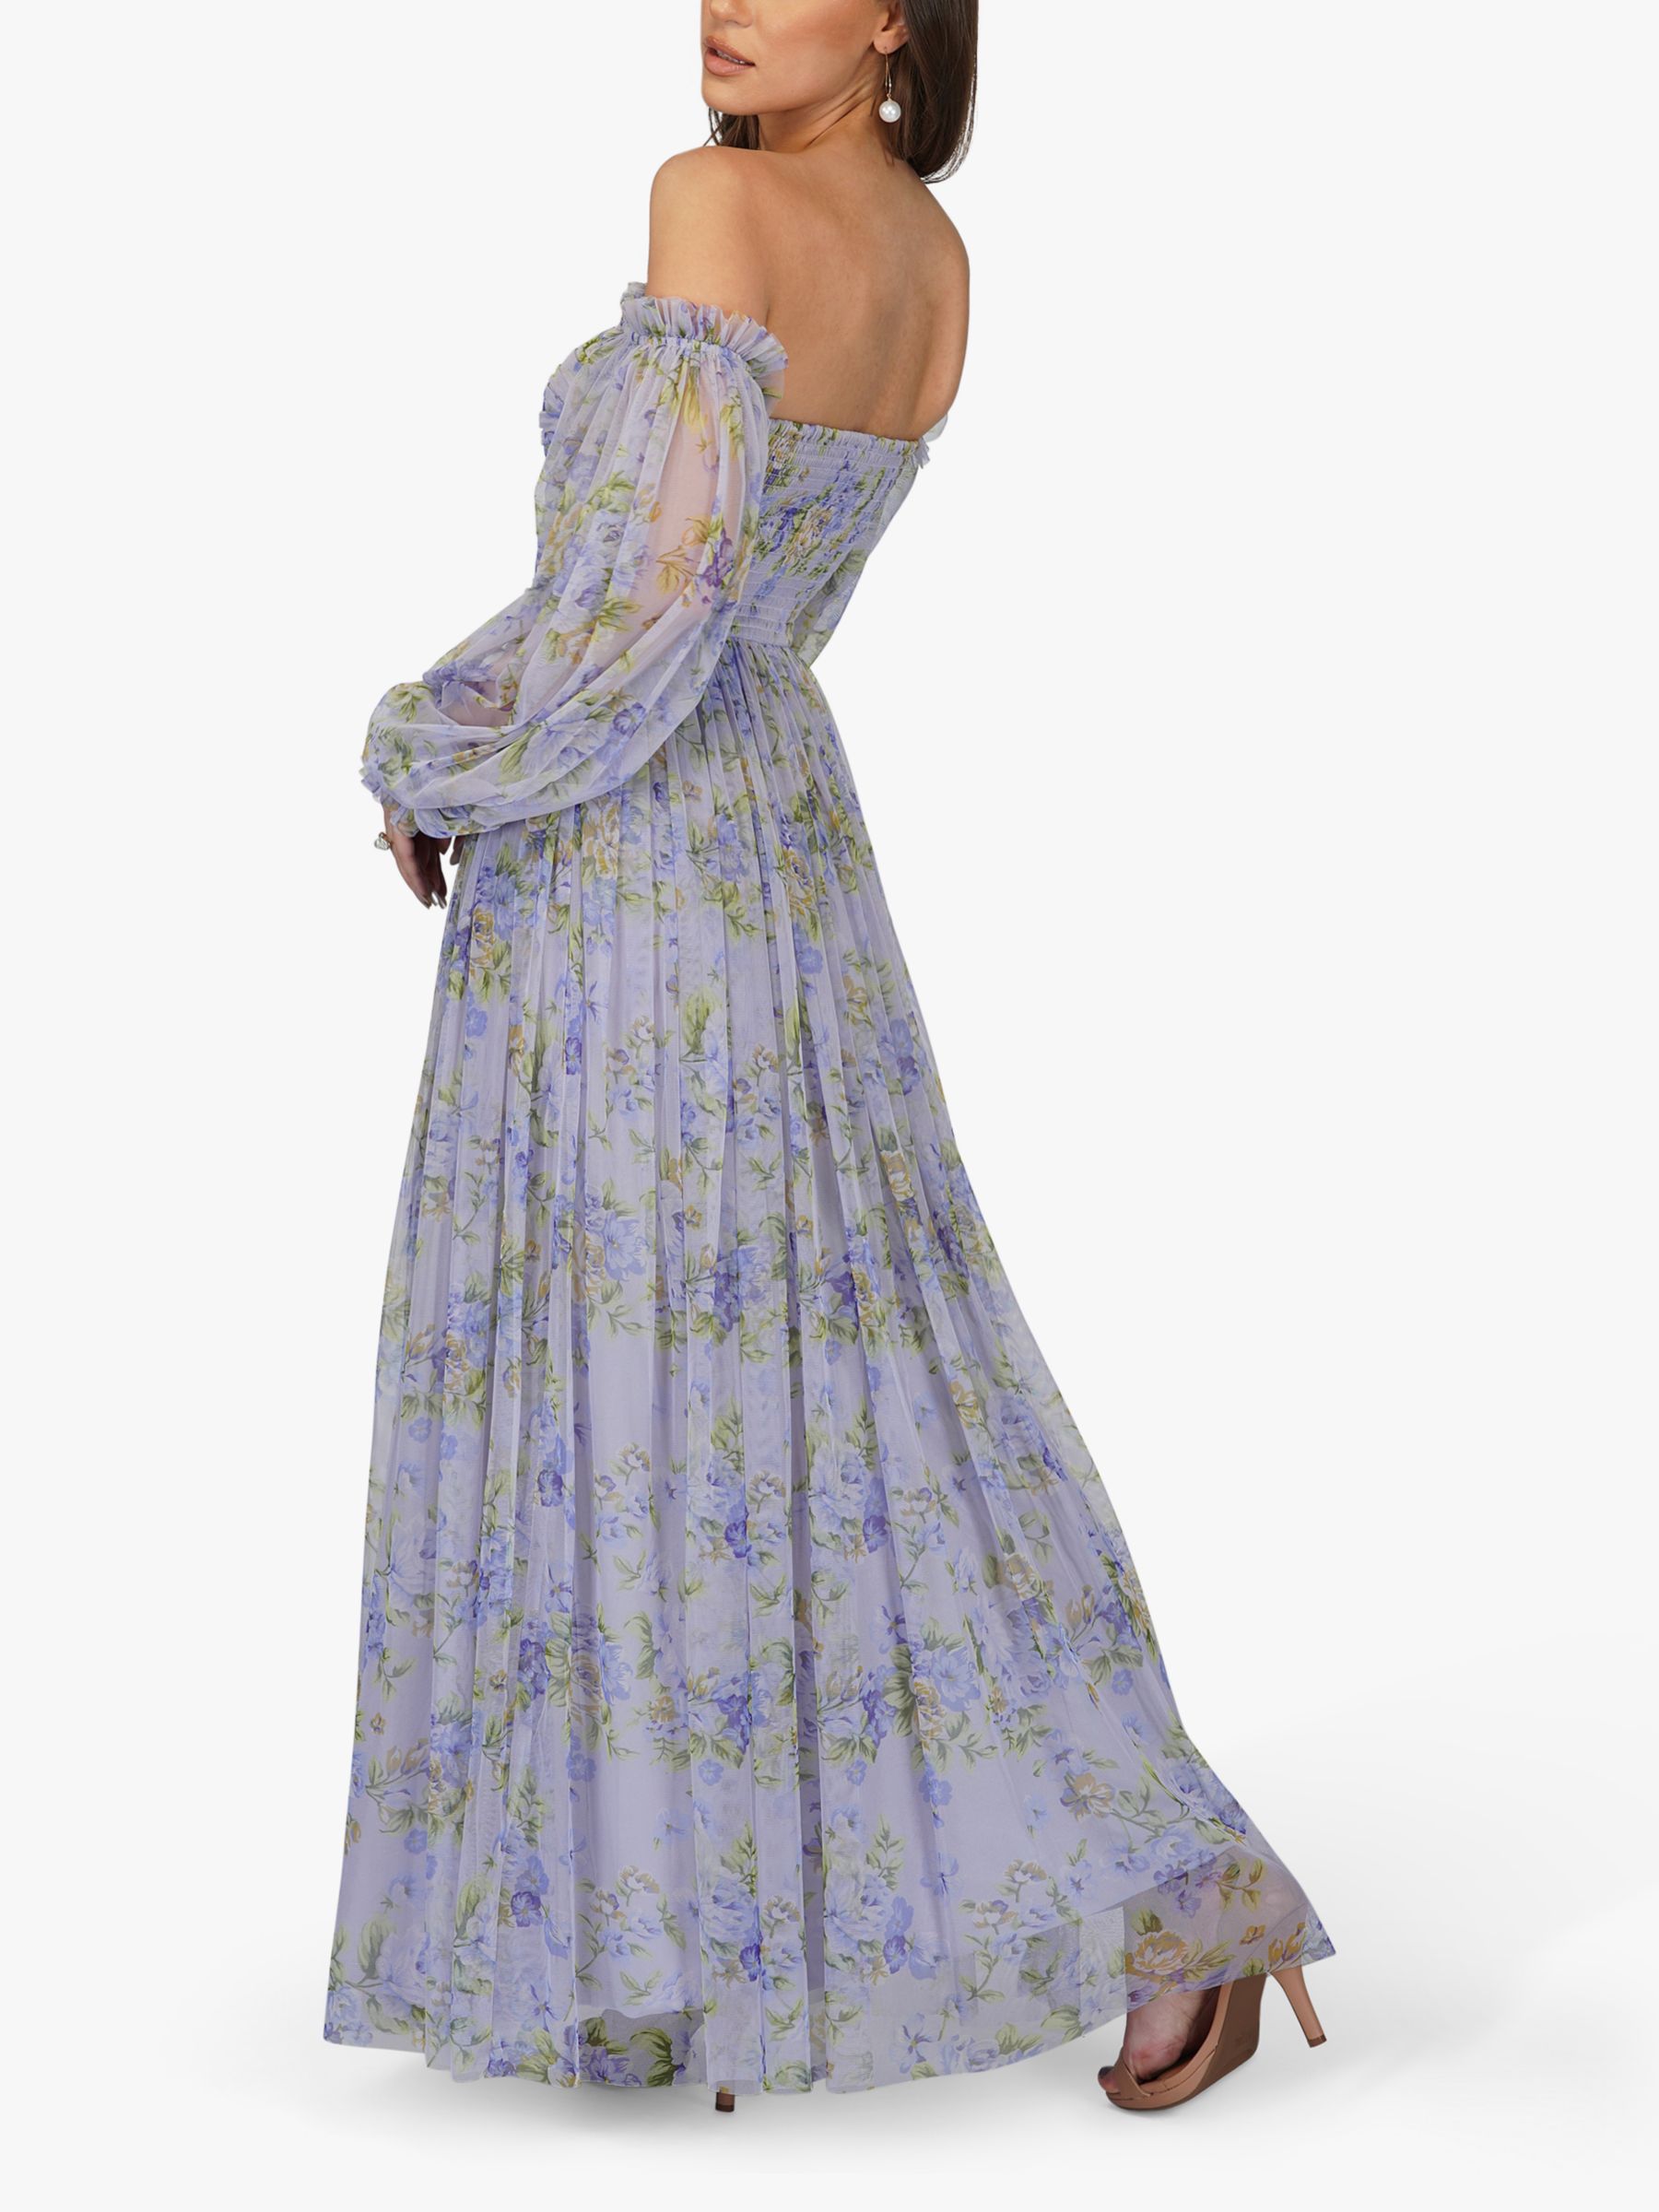 Lace & Beads Lana Ruched Bodice Maxi Dress, Lilac, 8